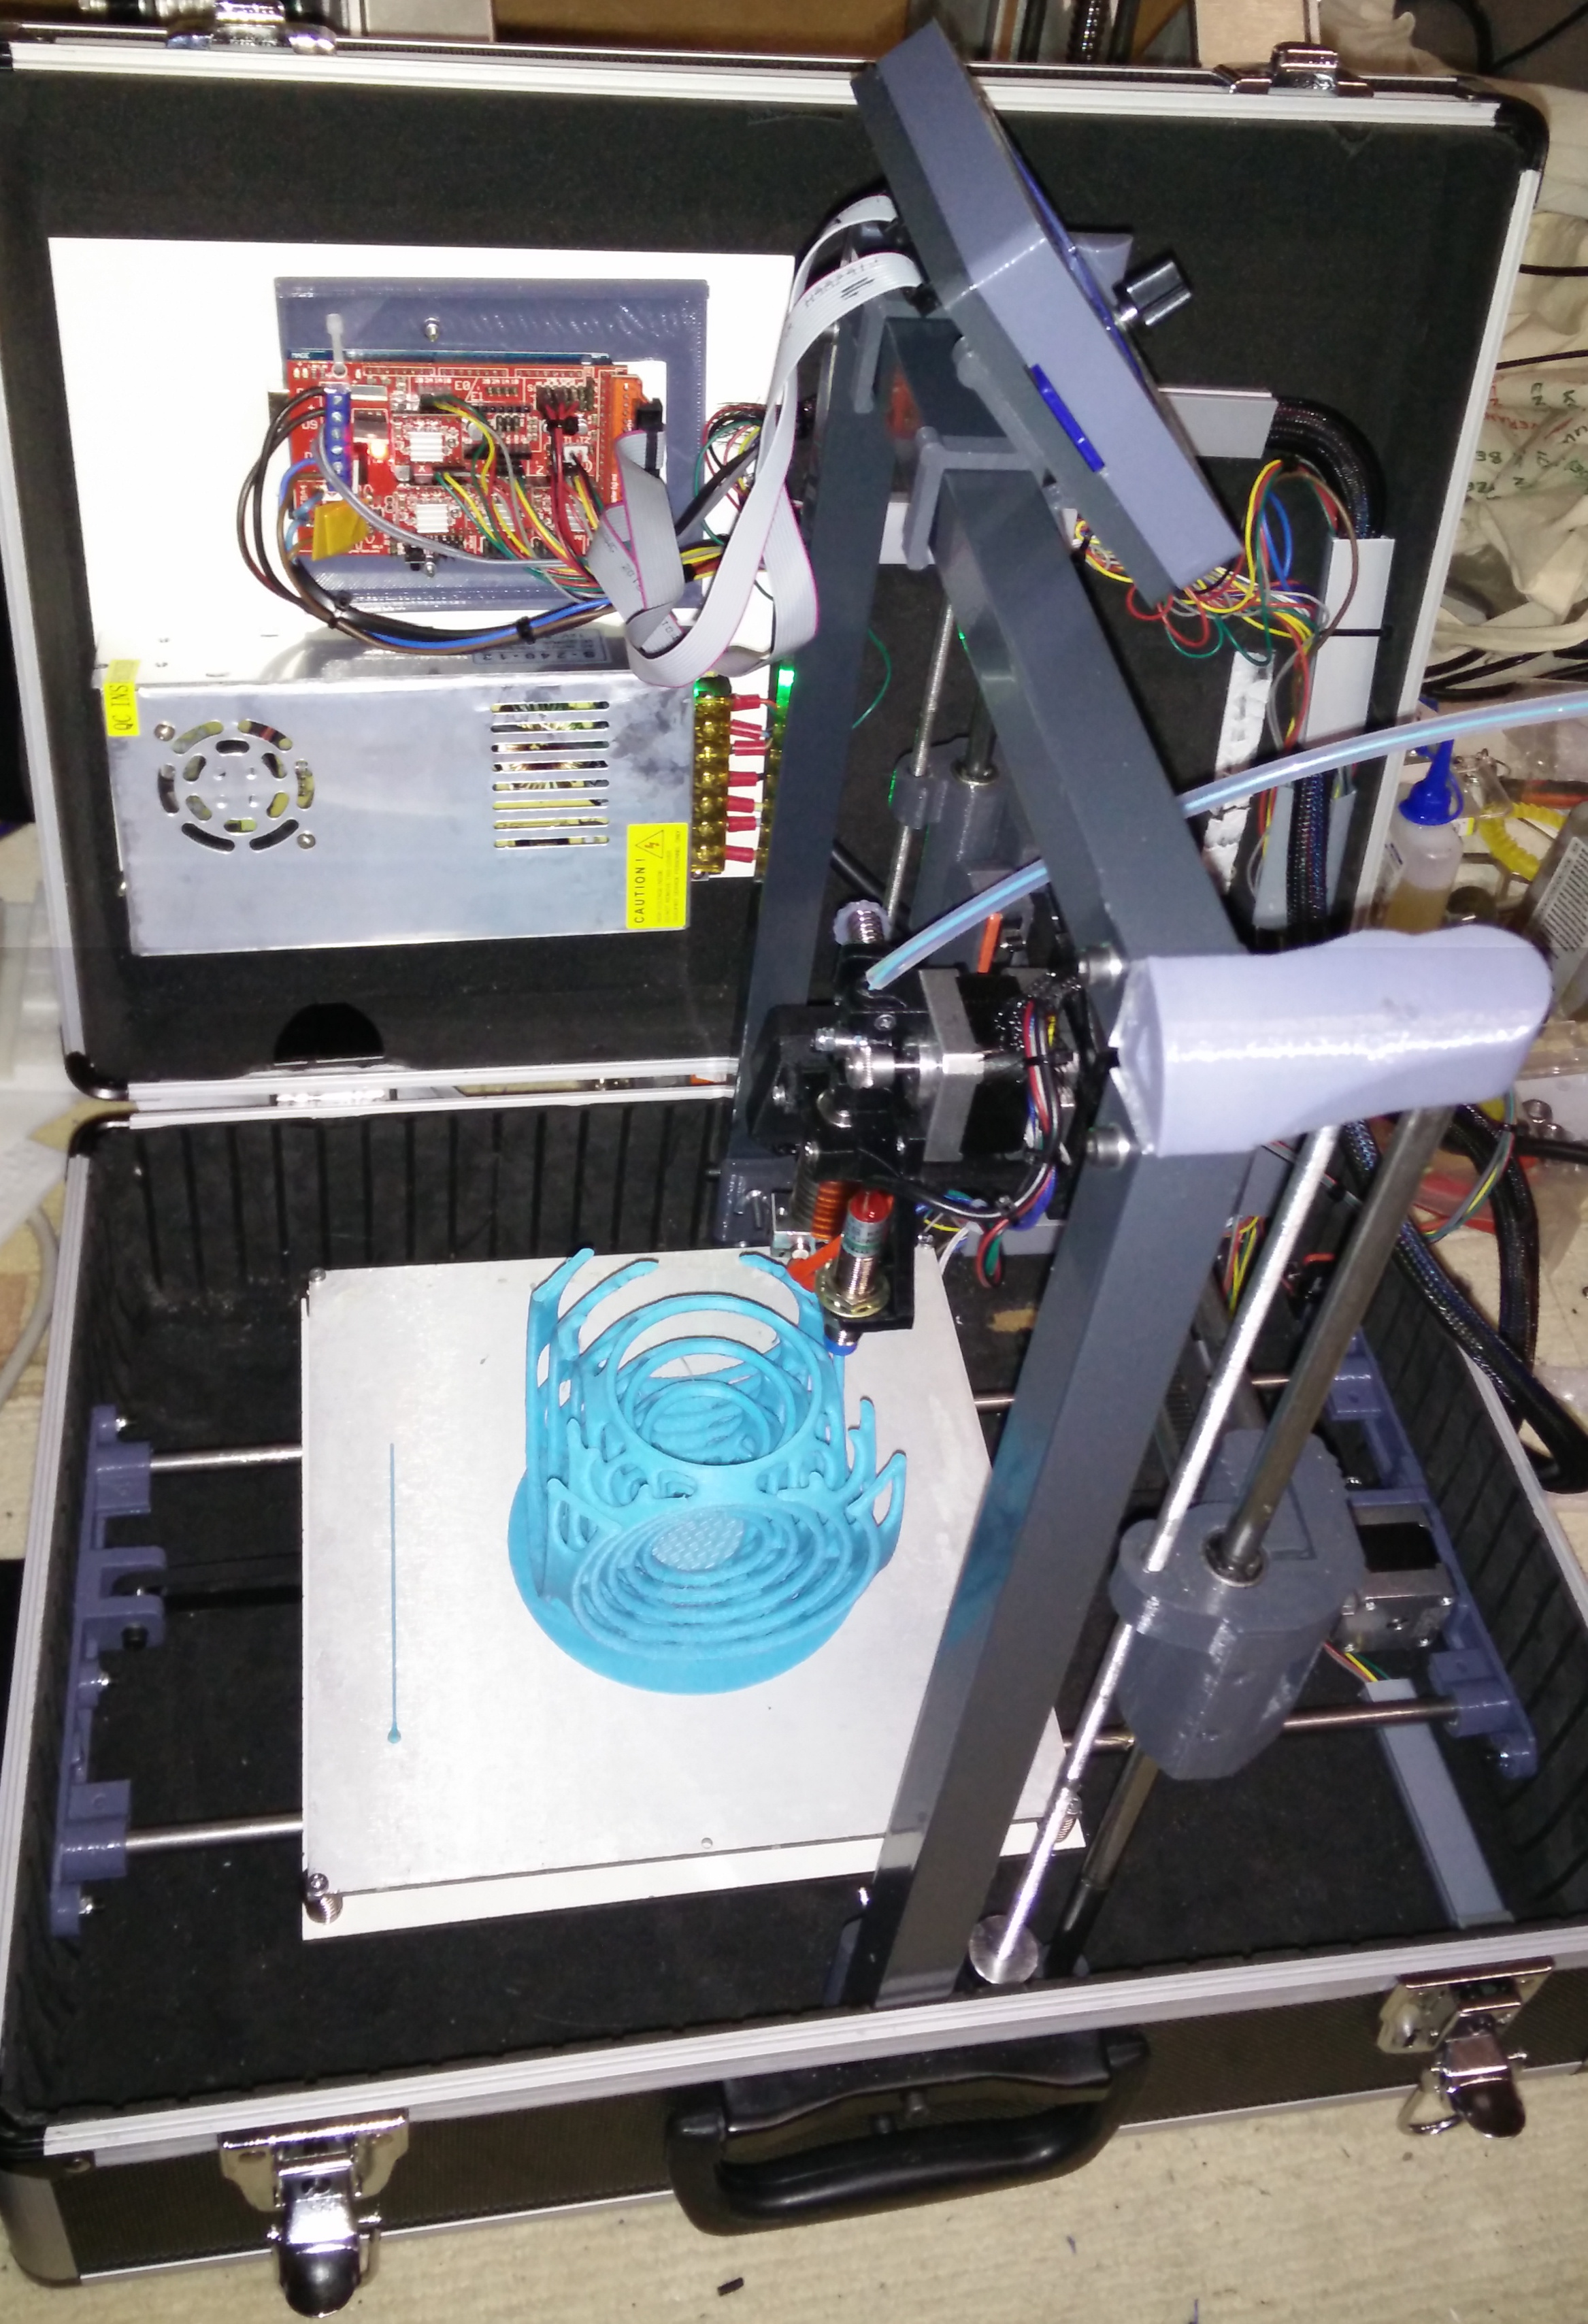 [Foto des offenen 3D-Druckers TEEBOT in Aktion mit Druckkopf, Druckplatte, Elektronik